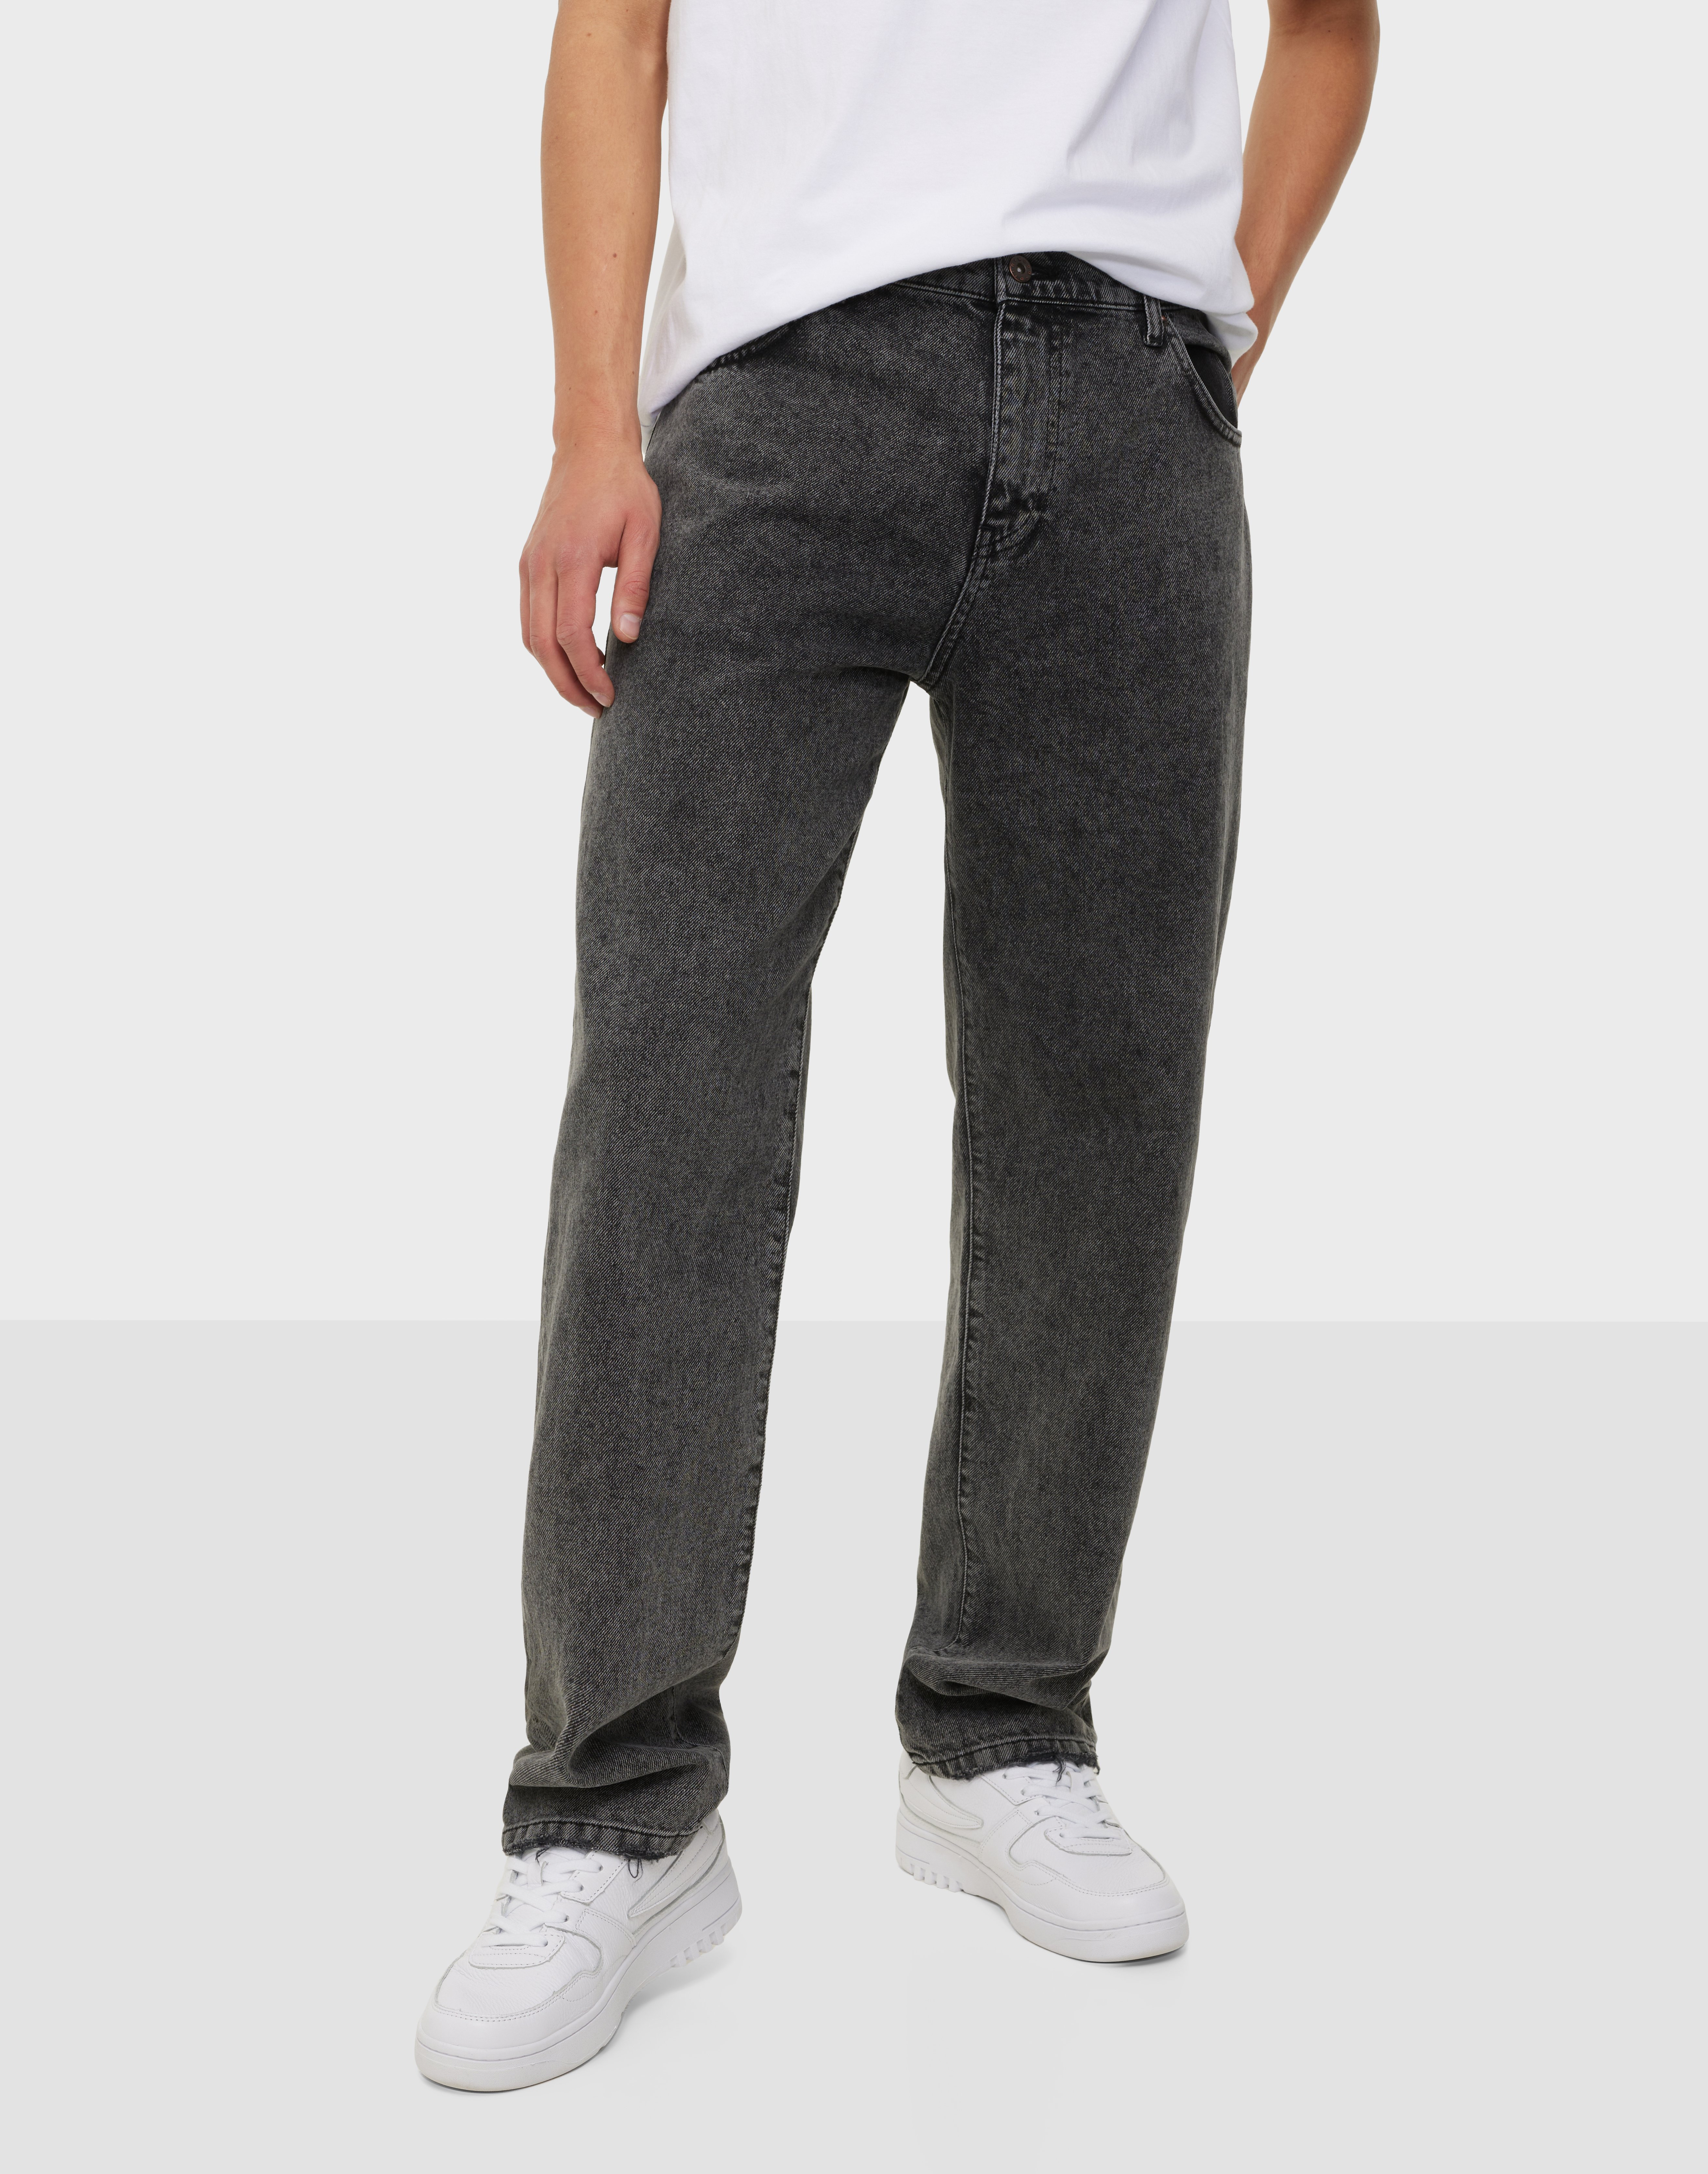 Shop Leroy Thun Black Jeans - Grey - NLYMAN.COM